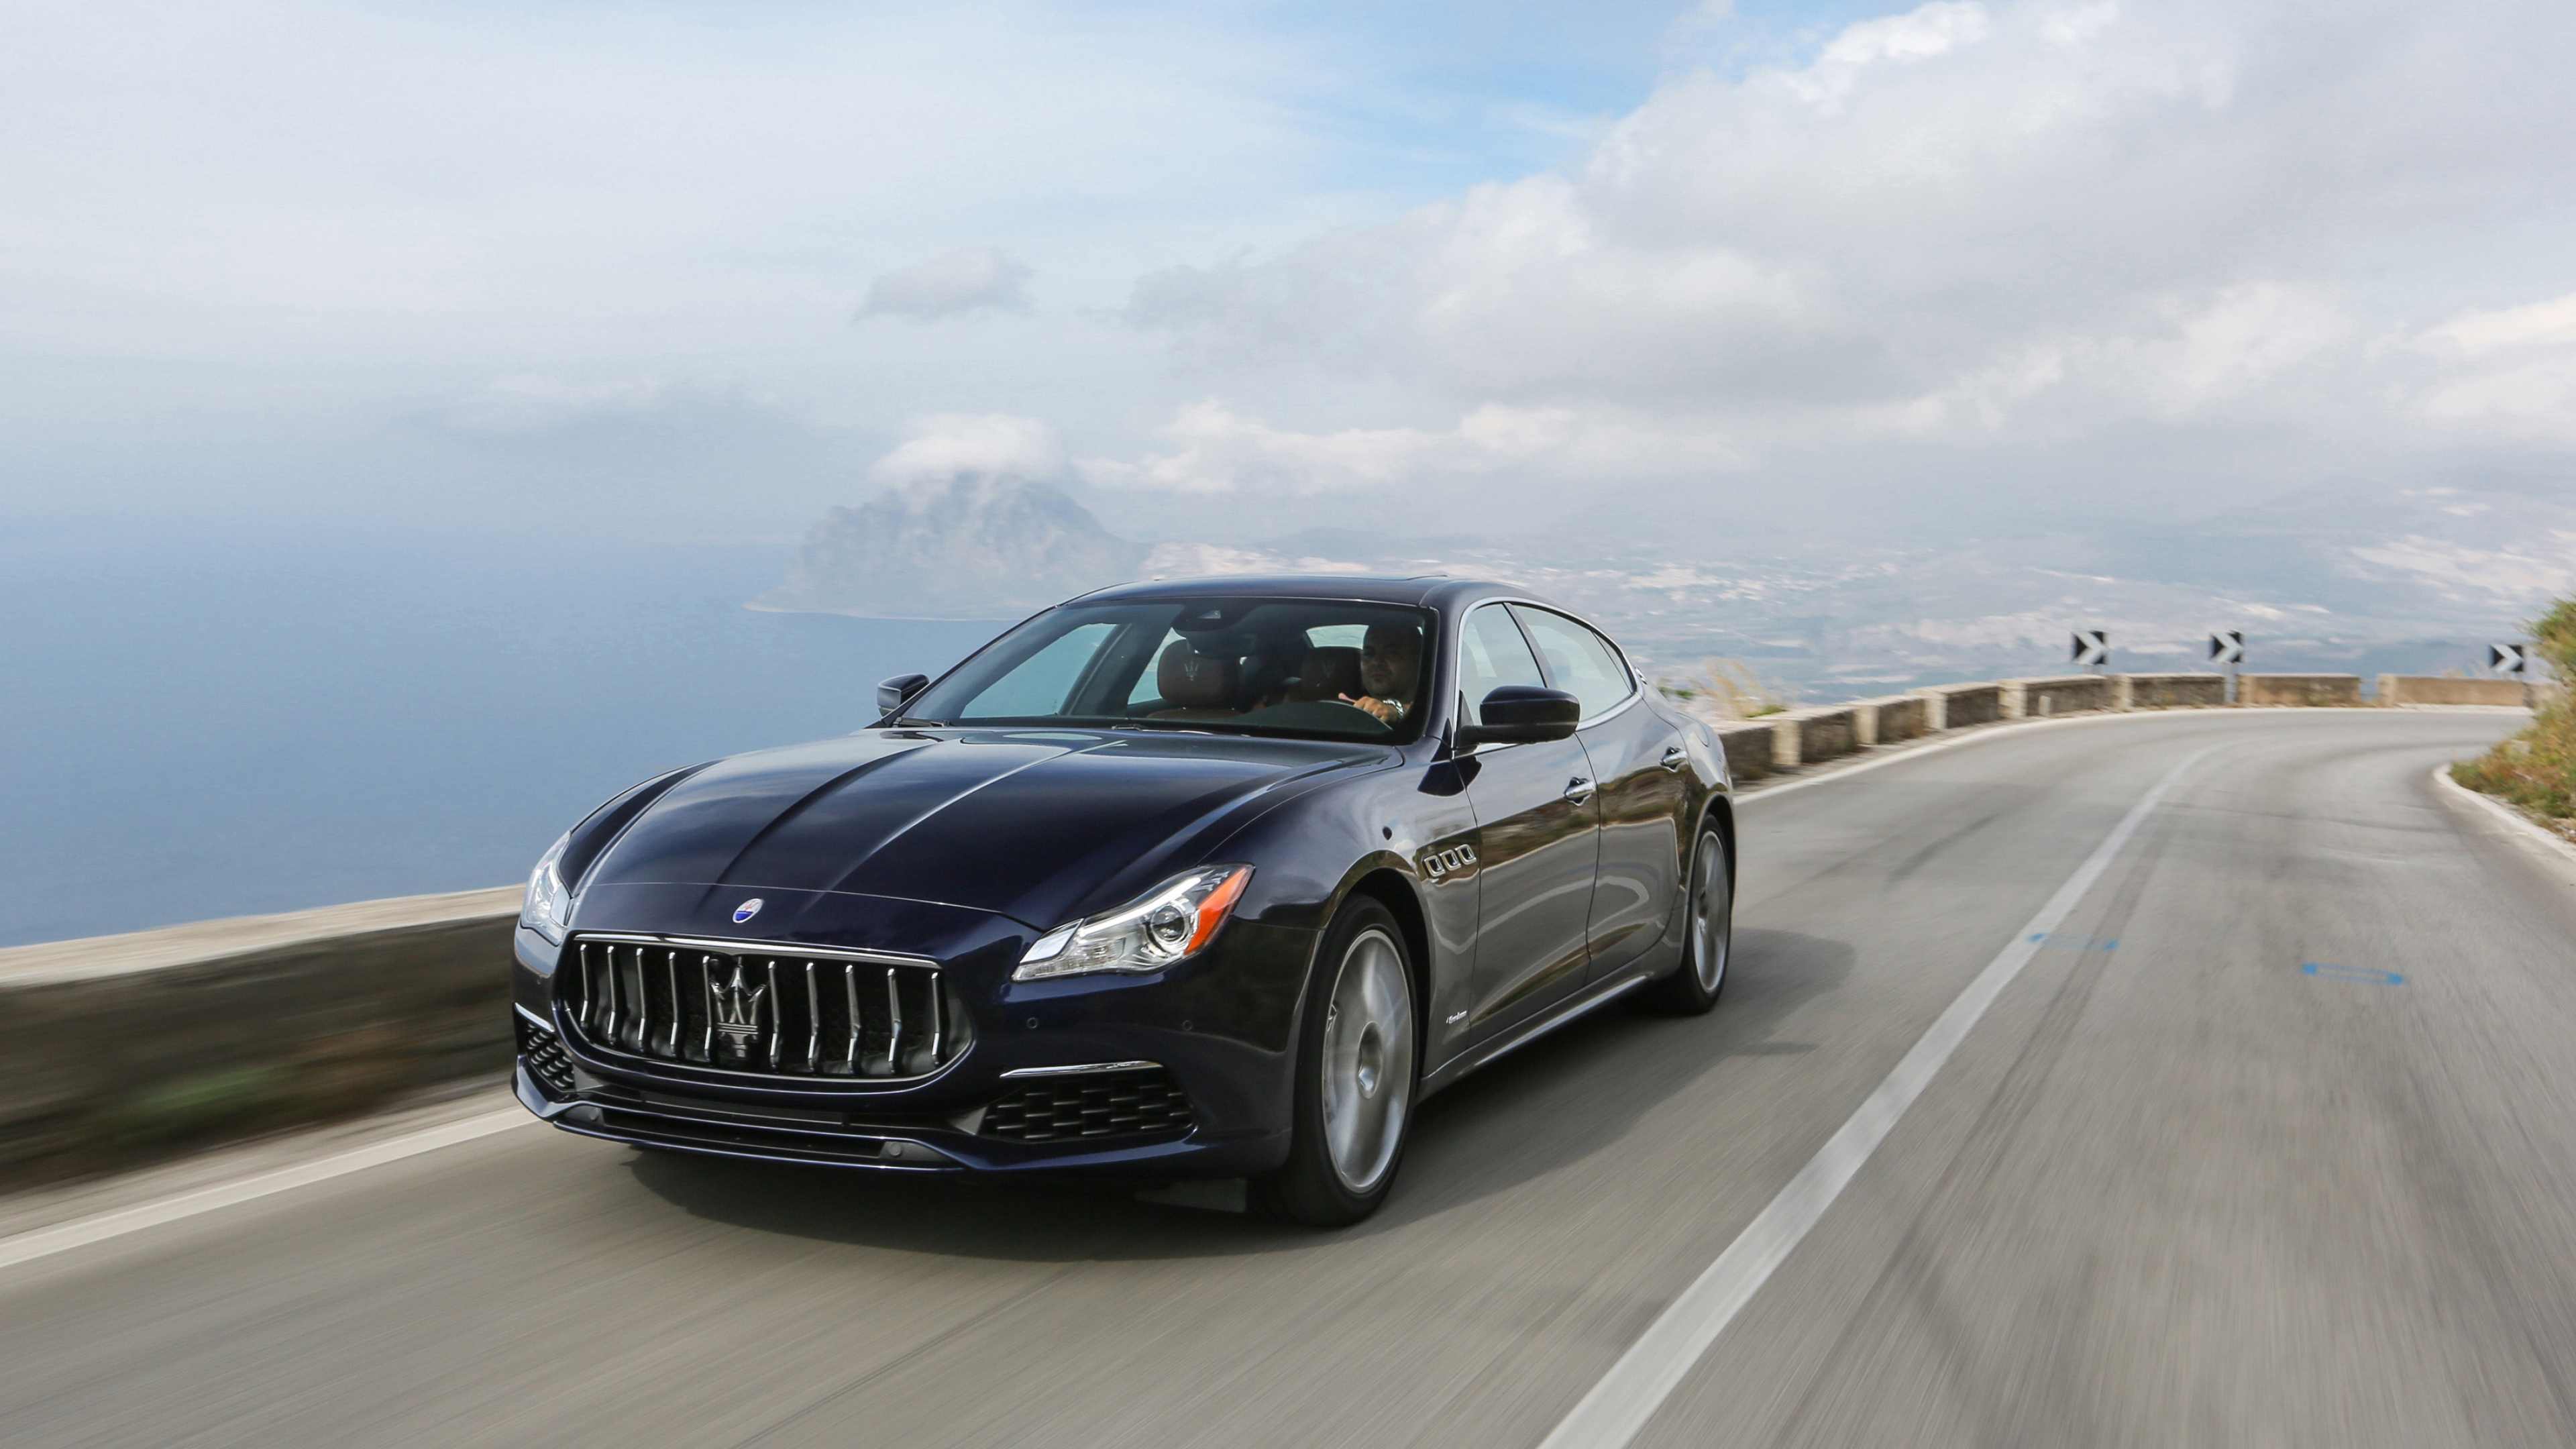 Maserati Quattroporte, Luxury car, 4K Ultra HD, Cars desktop wallpapers, 3840x2160 4K Desktop